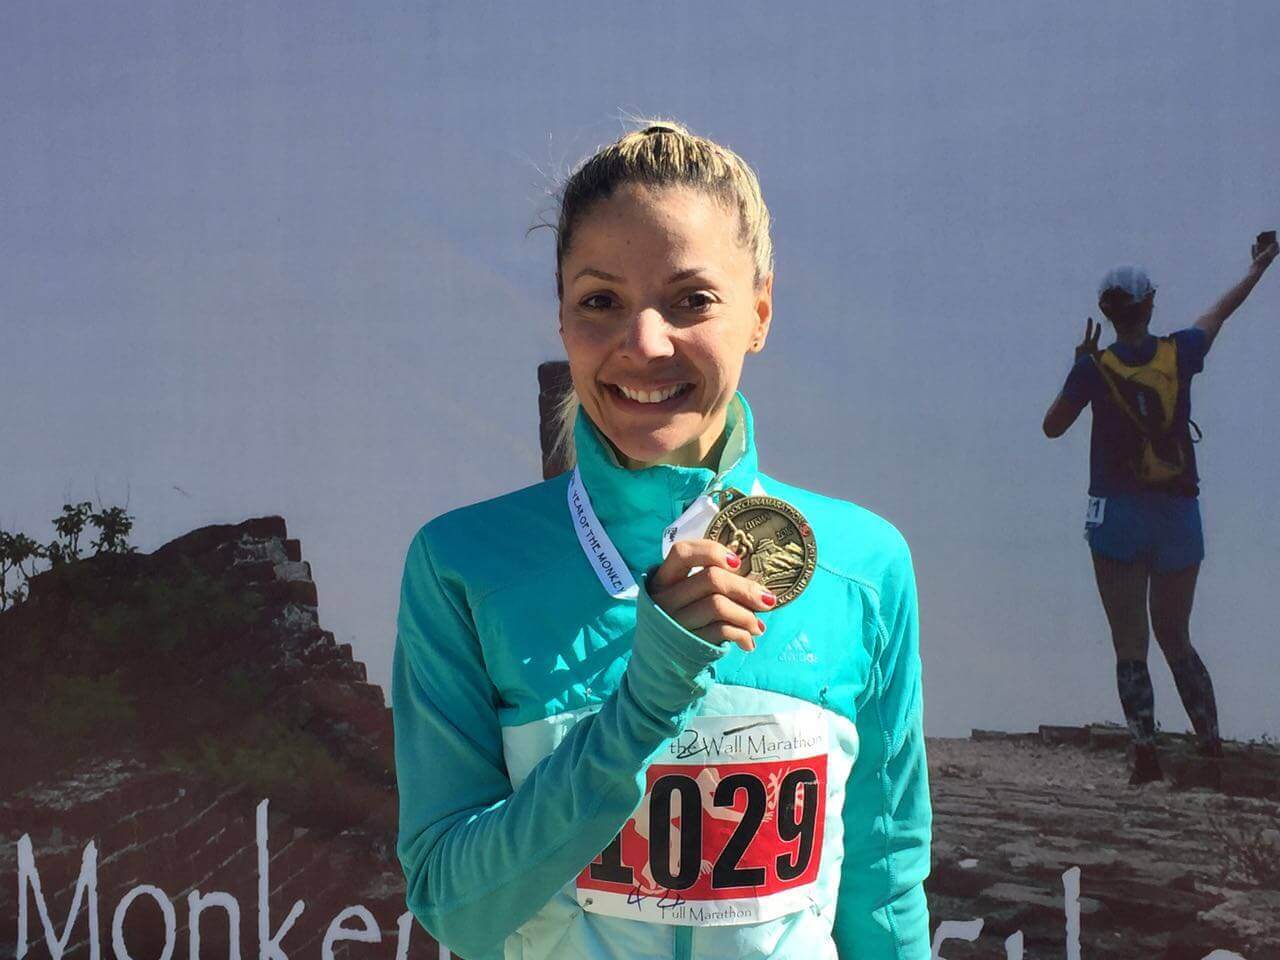 Maria Matos maratona Muralha da China 2016 medalha